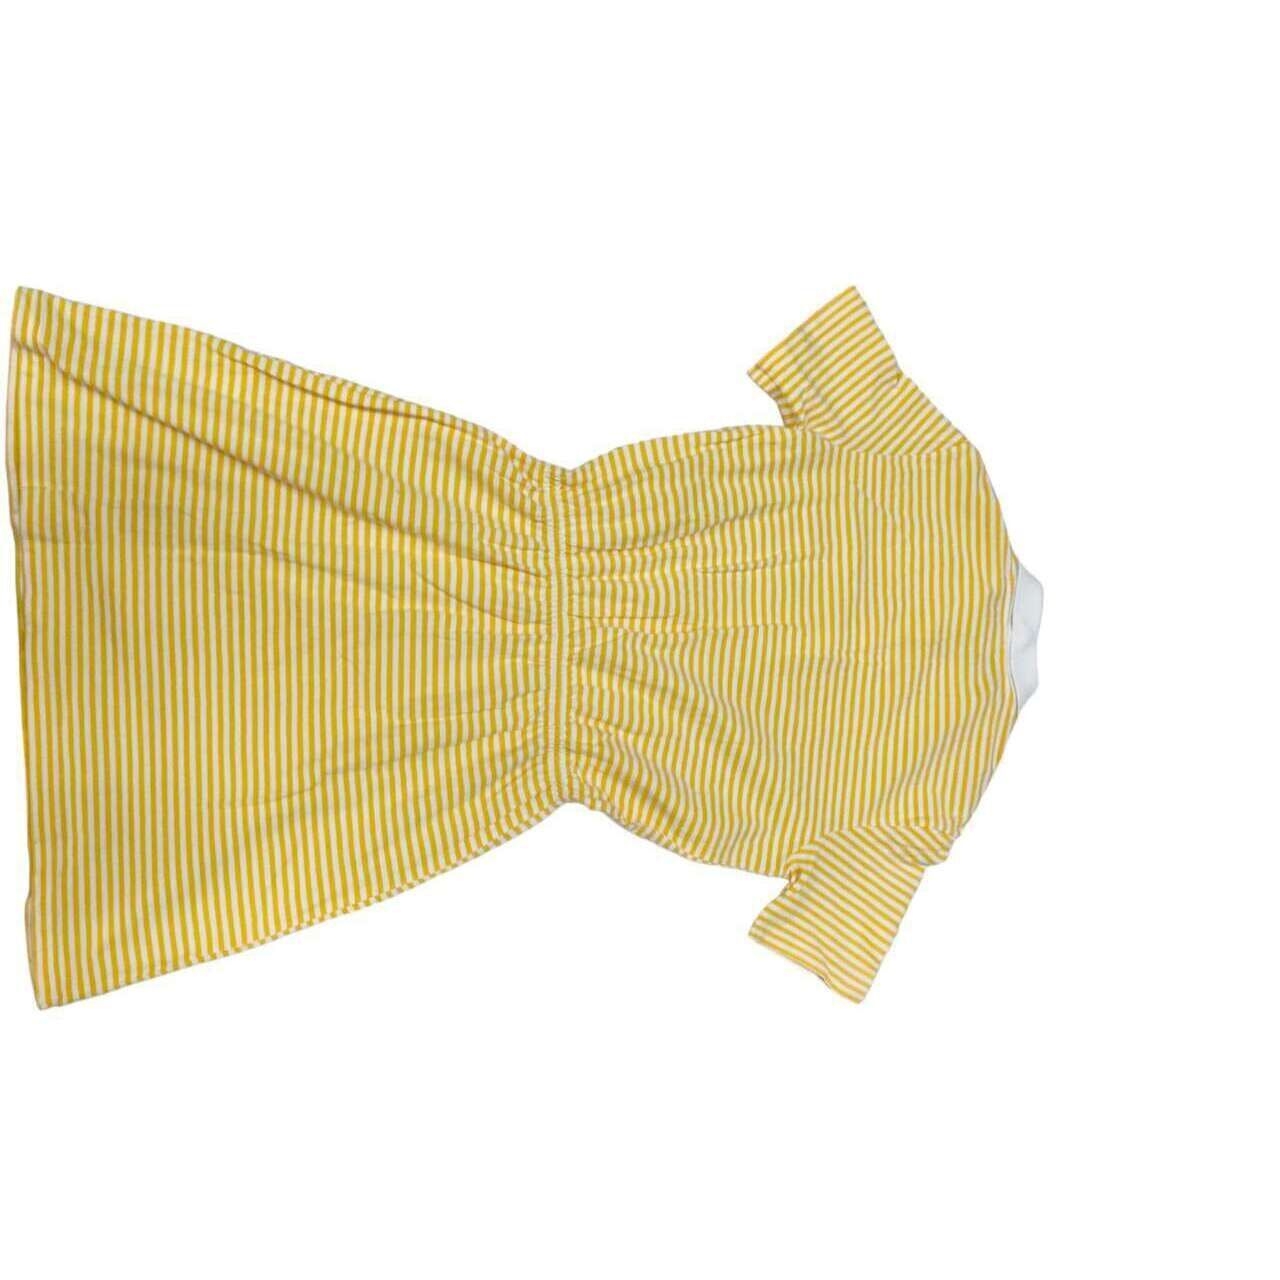 Lacoste Yellow Stripes Mini Dress